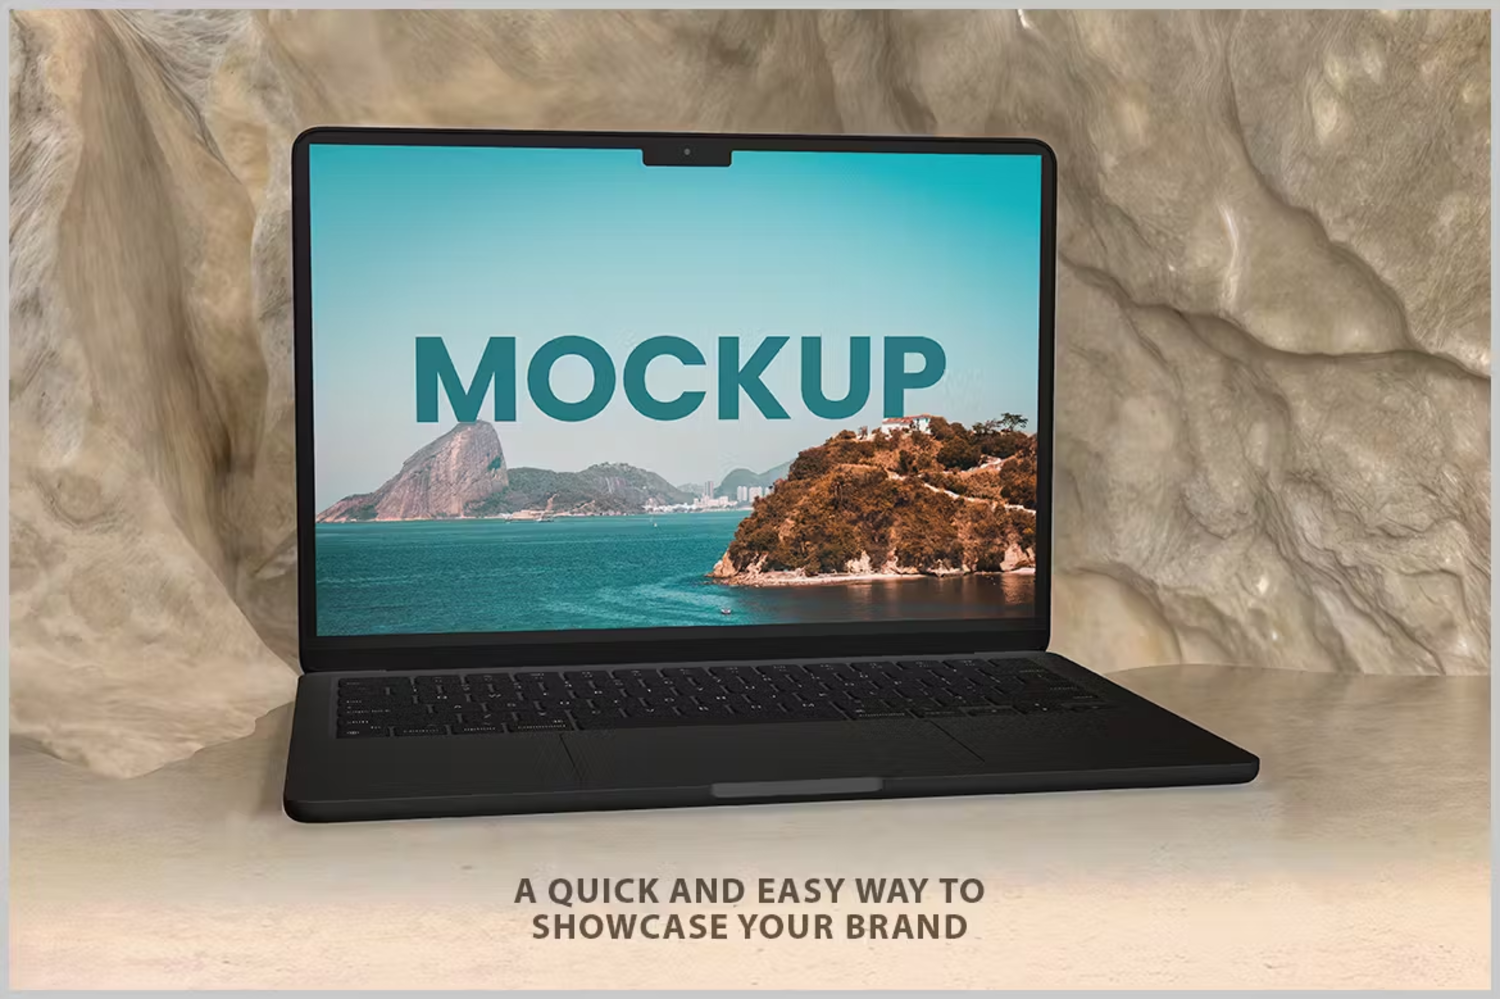 6153 岩石上的笔记本电脑模型样机-Laptop Leaning Against the Rock Mockup